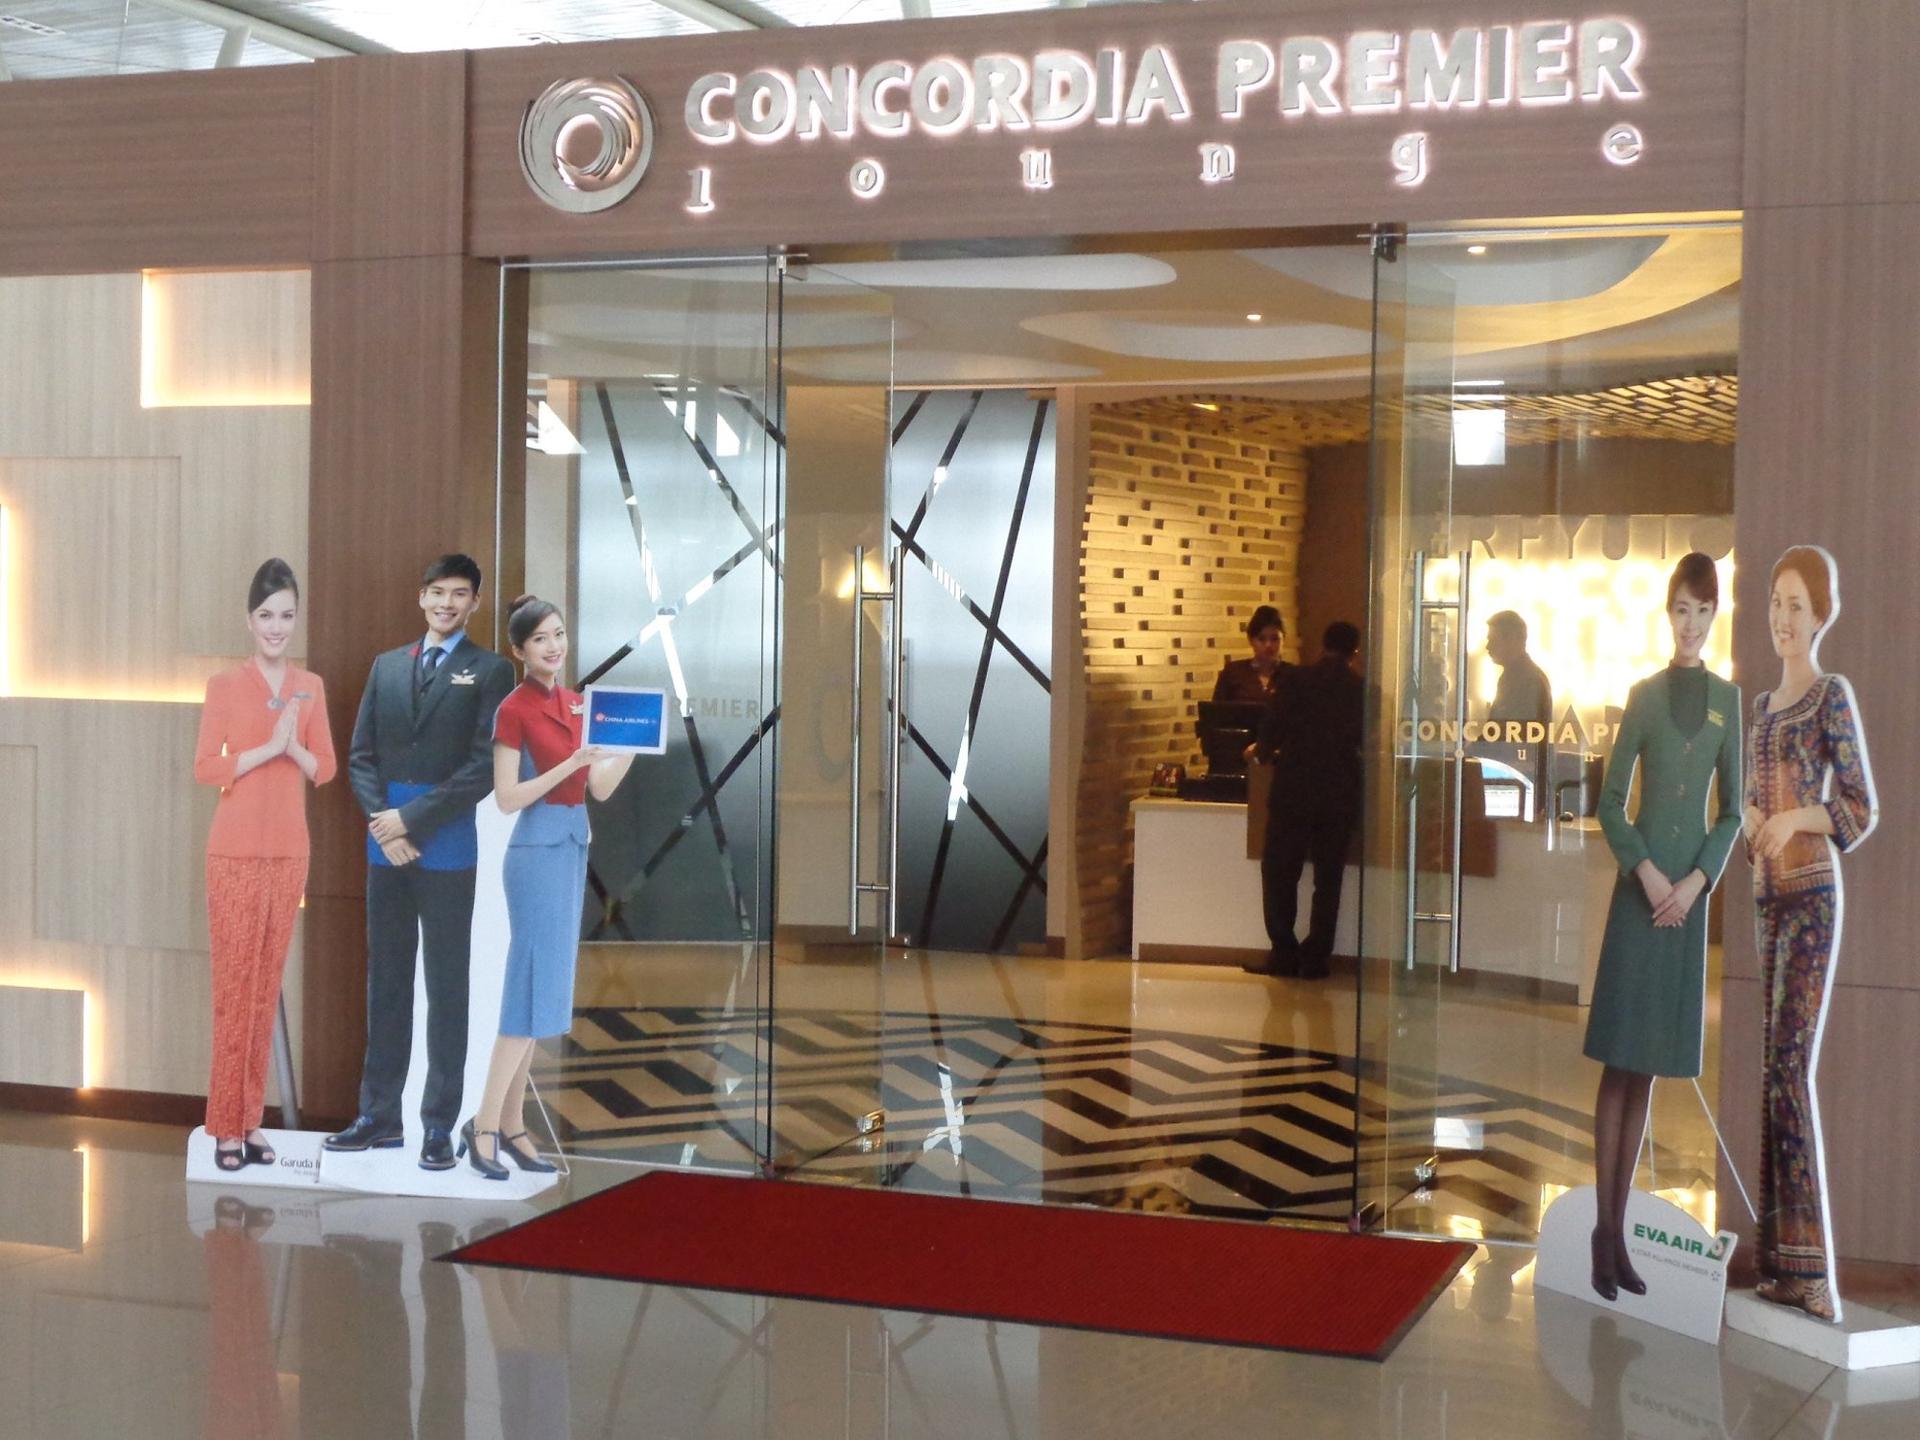 Concordia Premier Lounge image 28 of 81